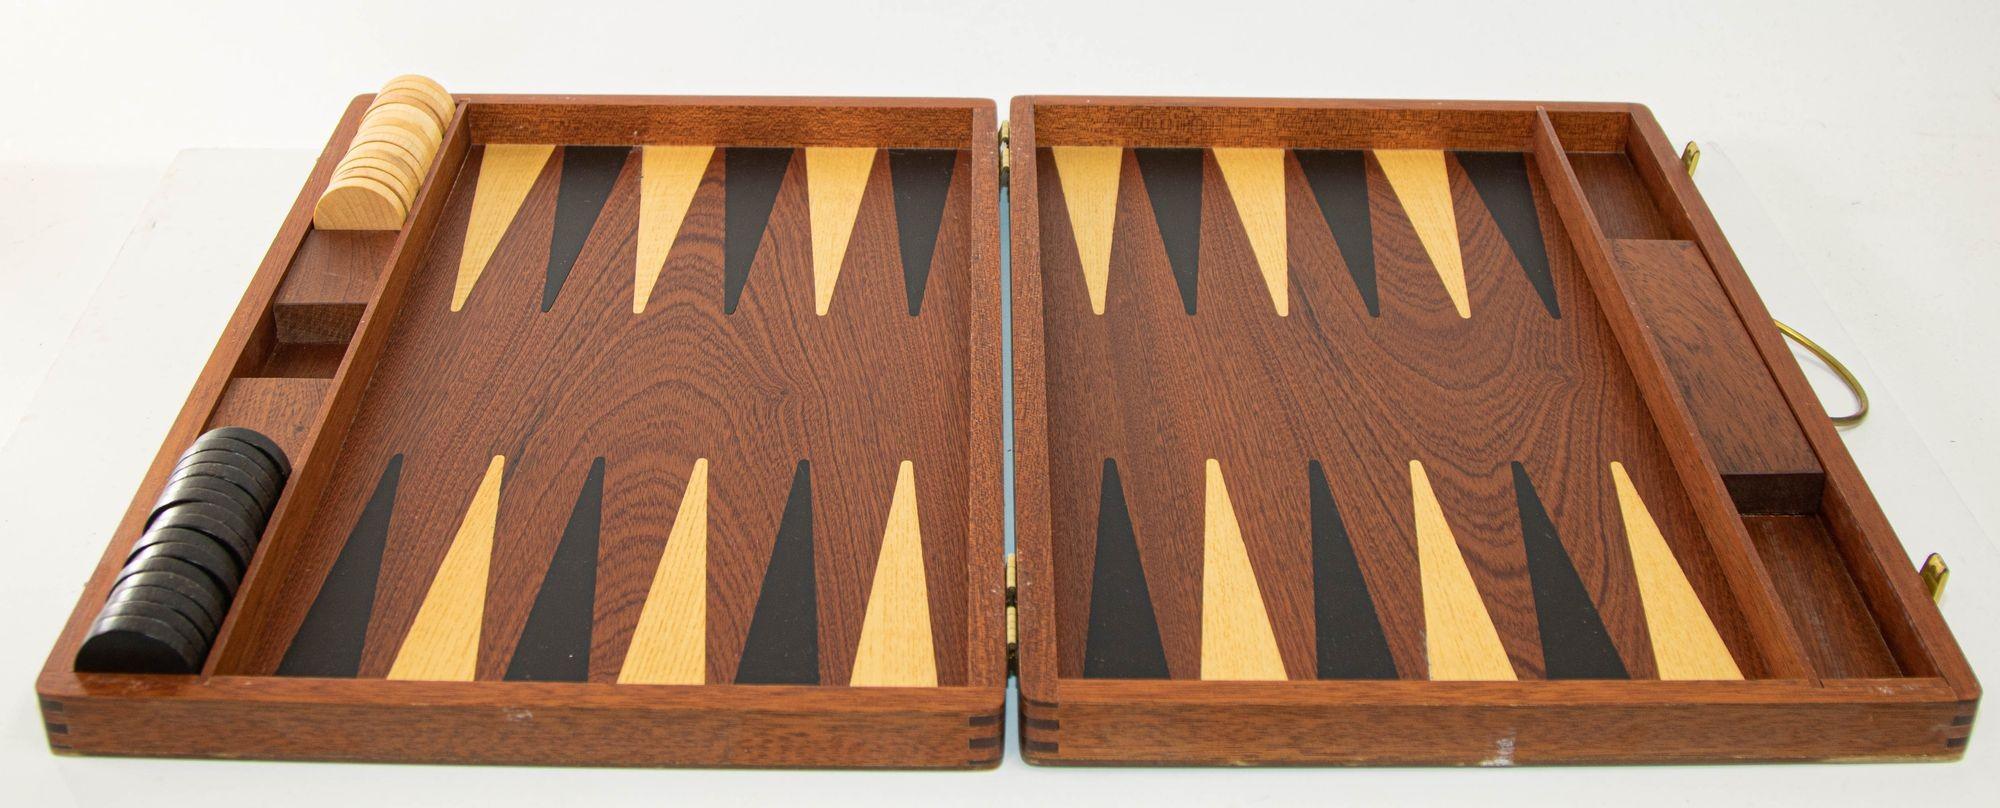 backgammon board for sale